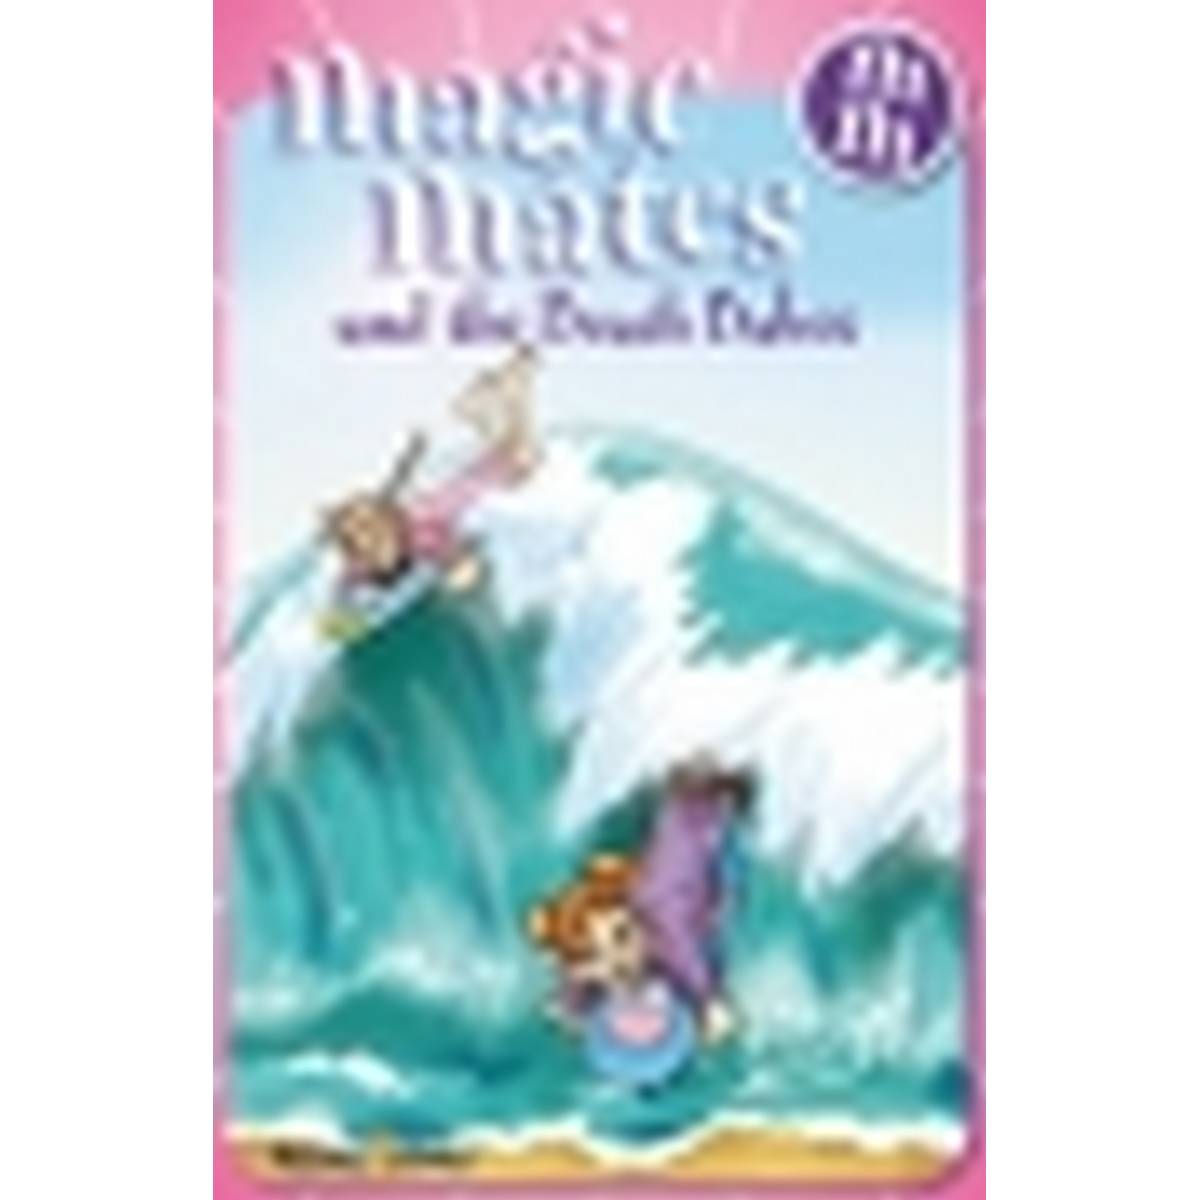 Magic Mates Fiction Pack of 12 Books plus FREE Activities